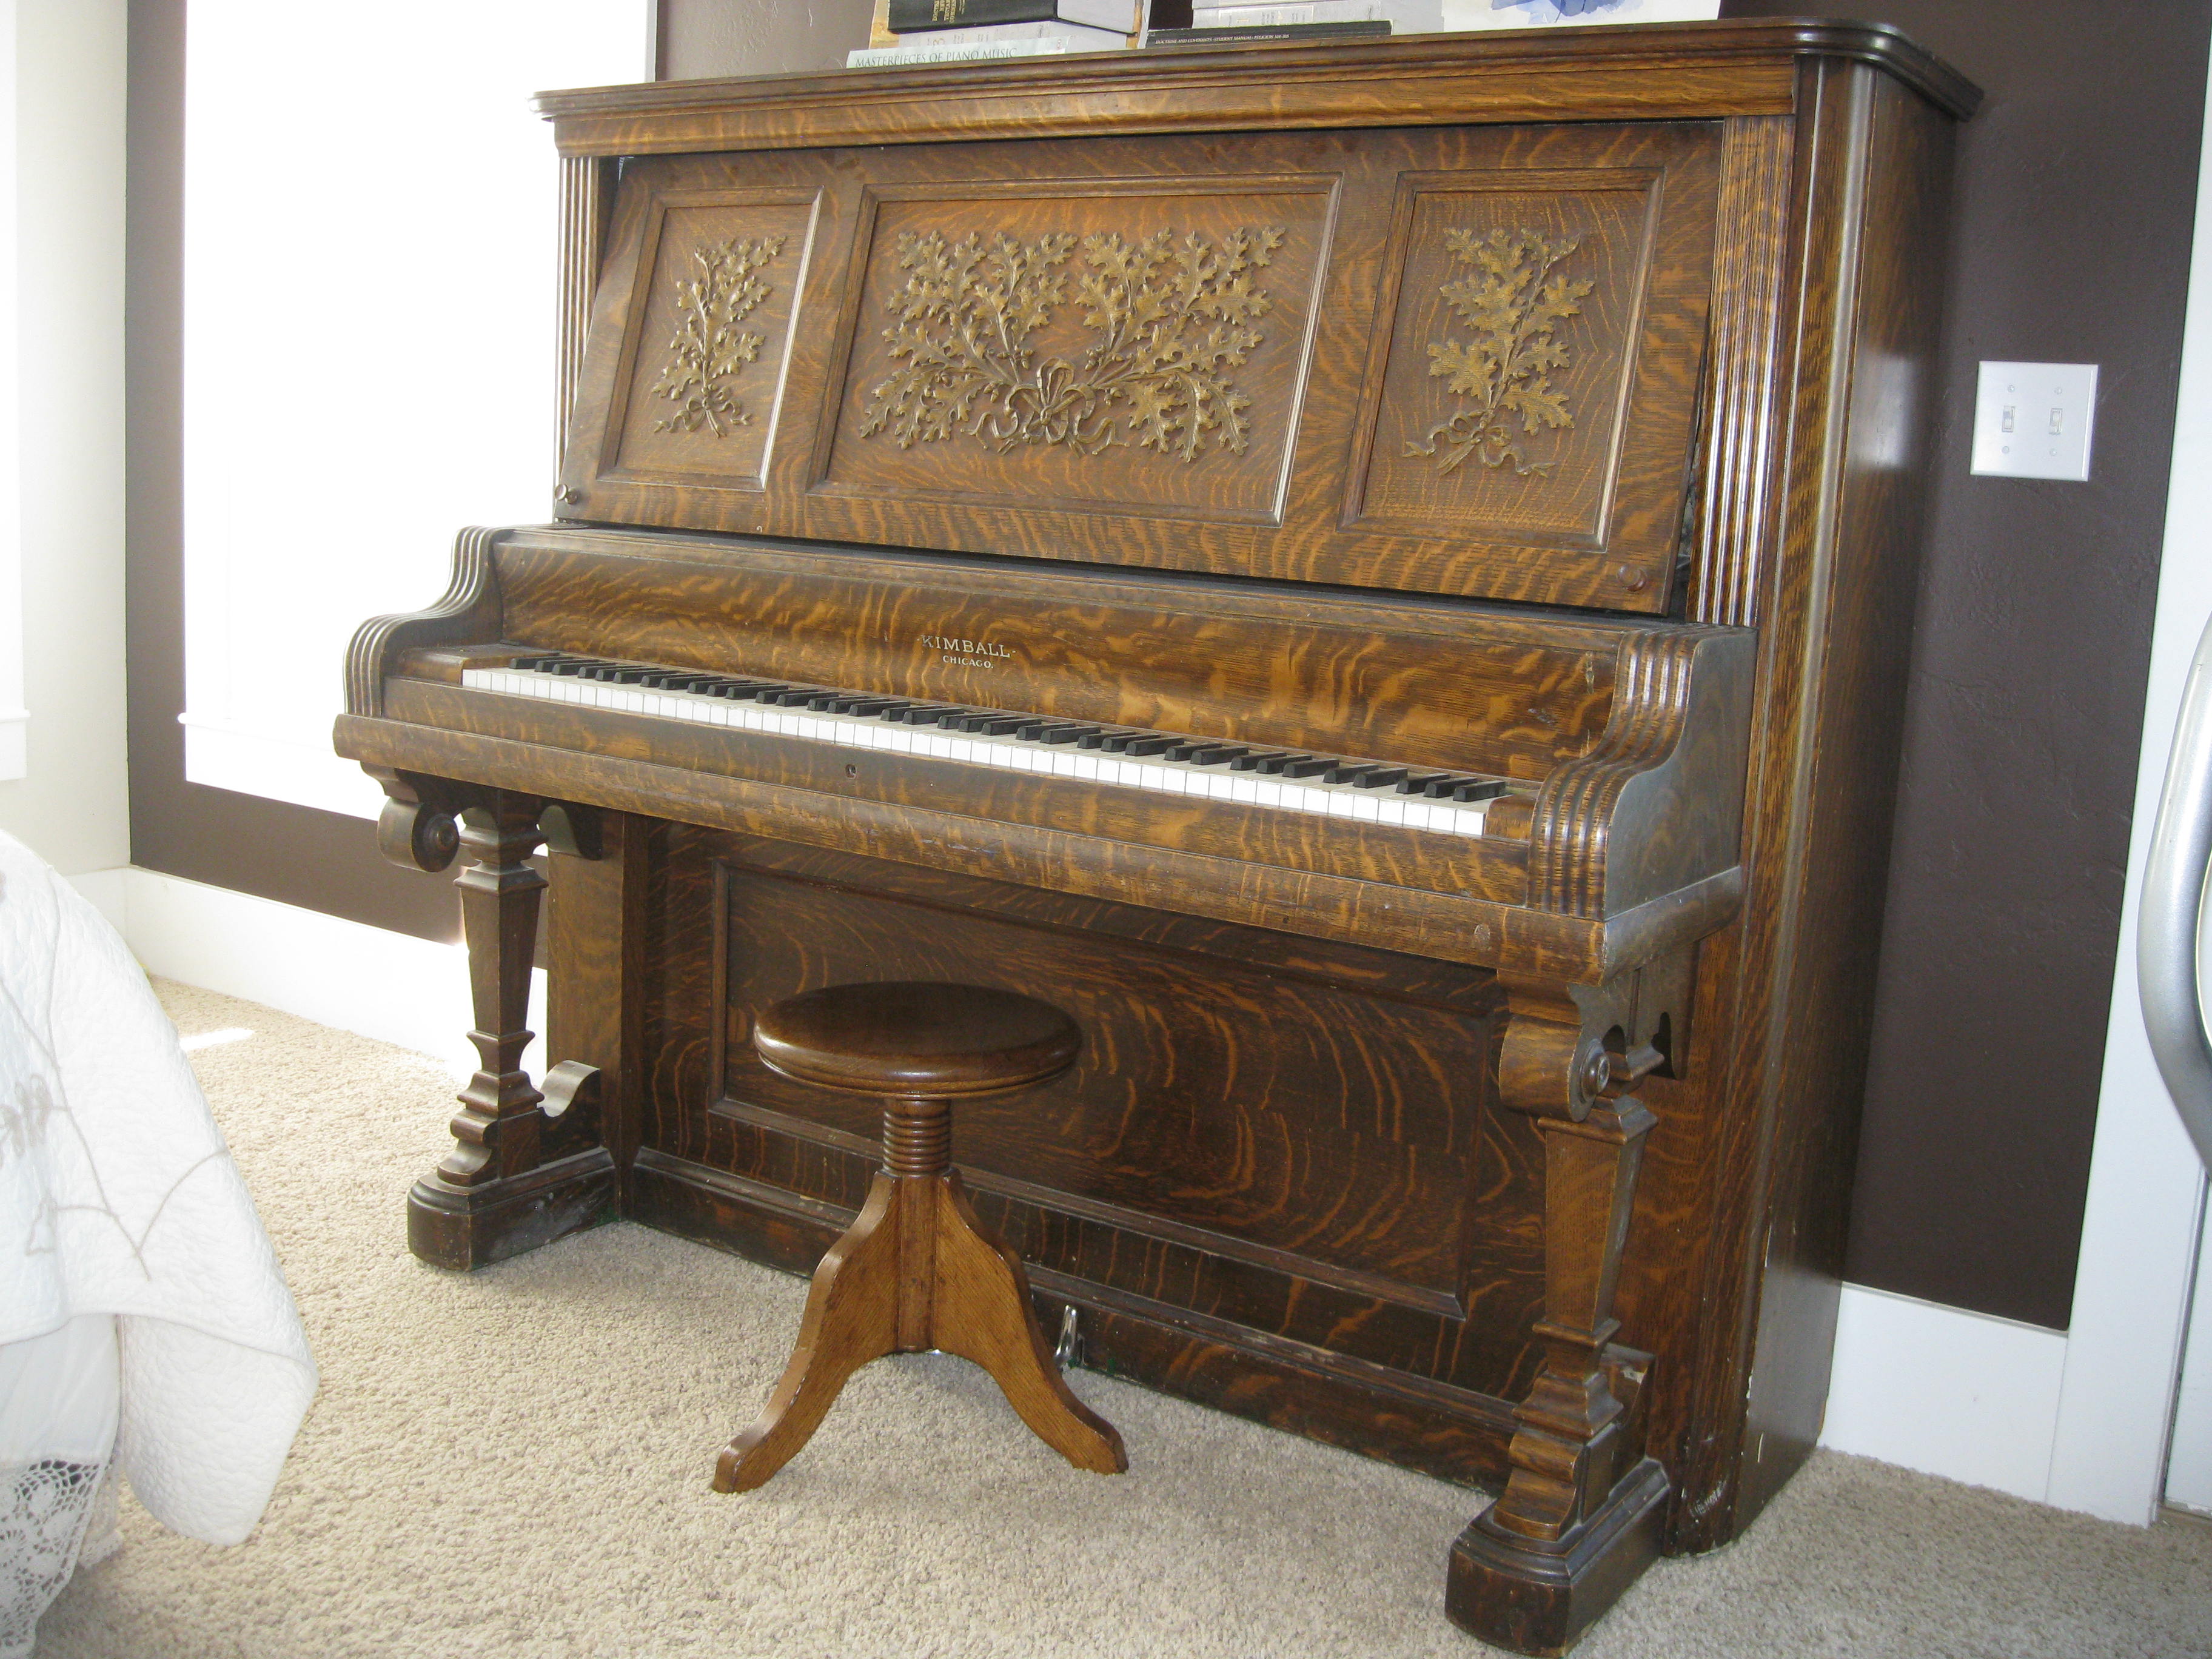 My Antique Piano · Tawna Allred